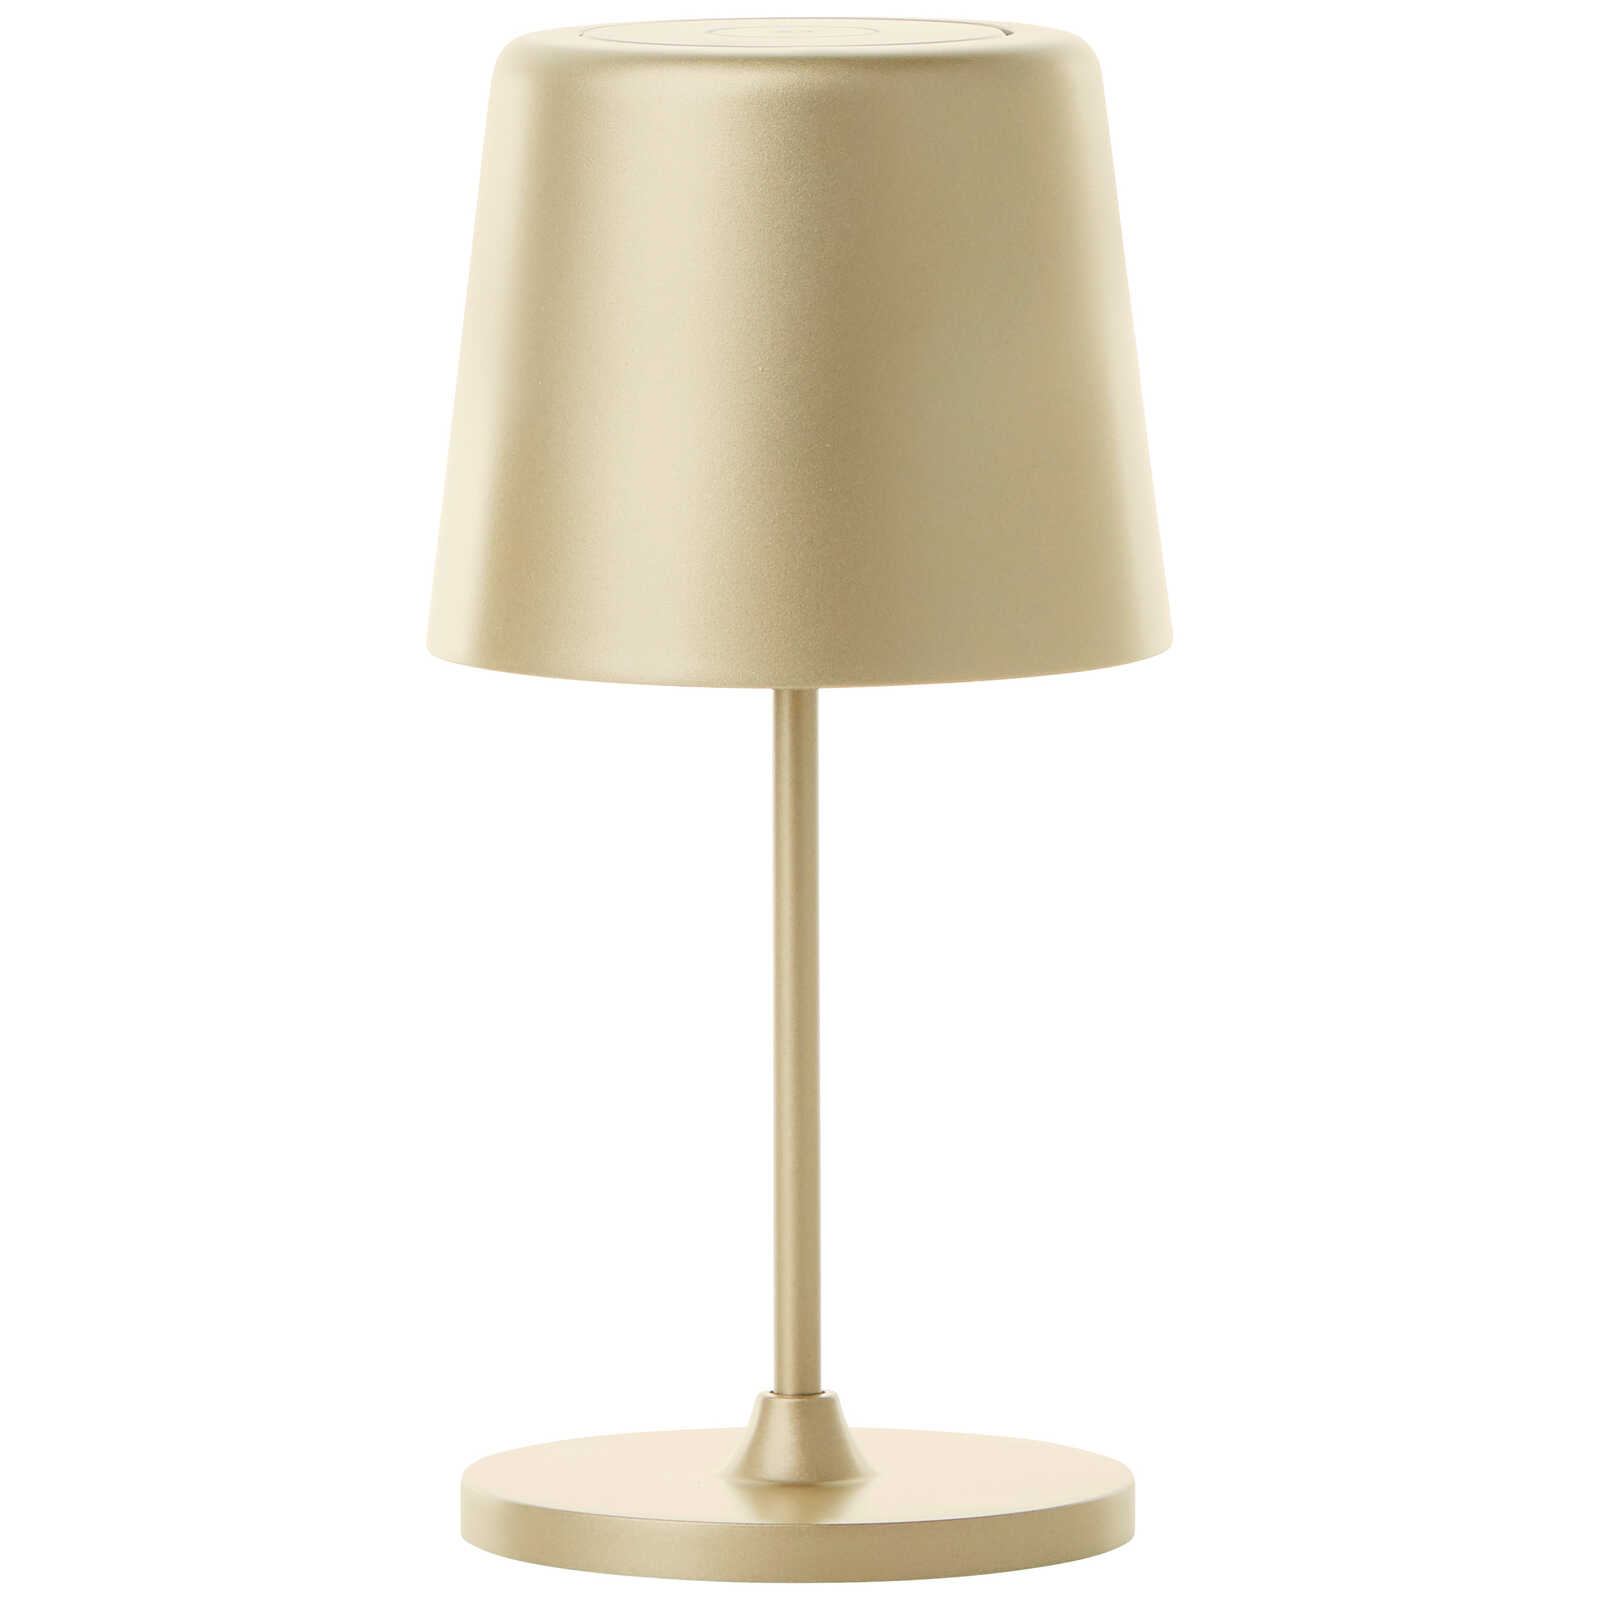             Lampe de table en métal - Cosy 2 - Gold
        